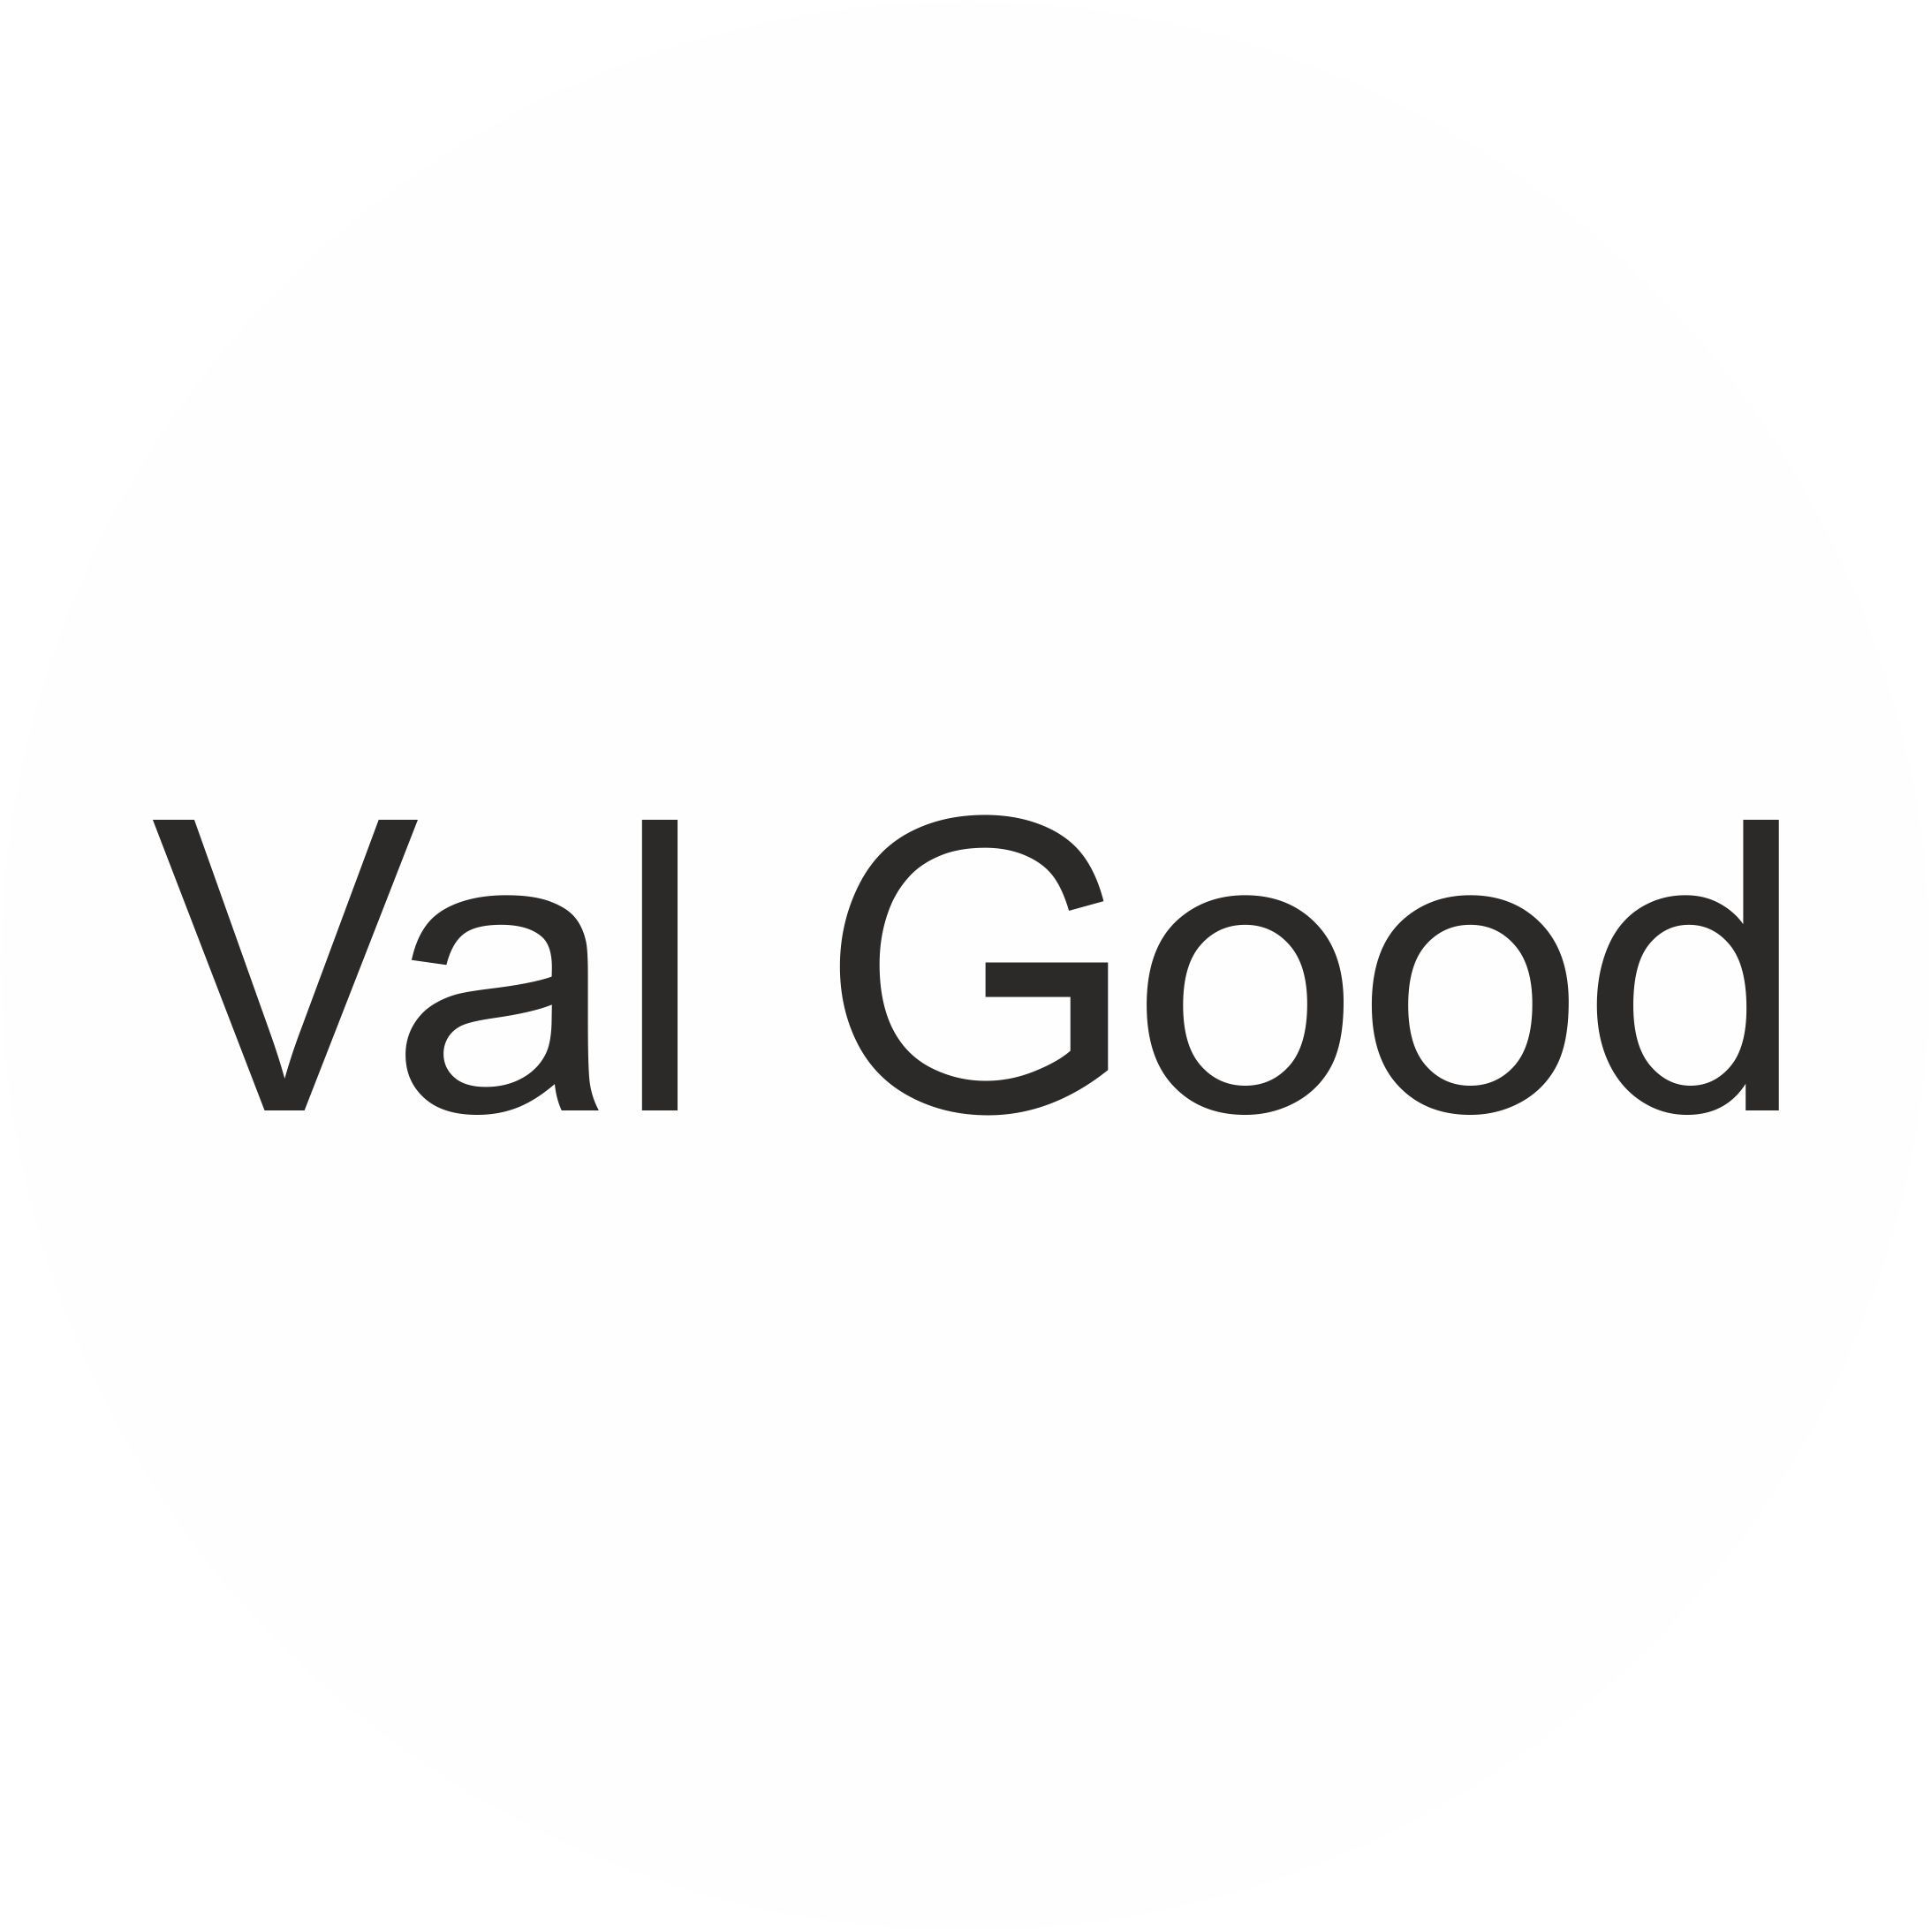 Val Good